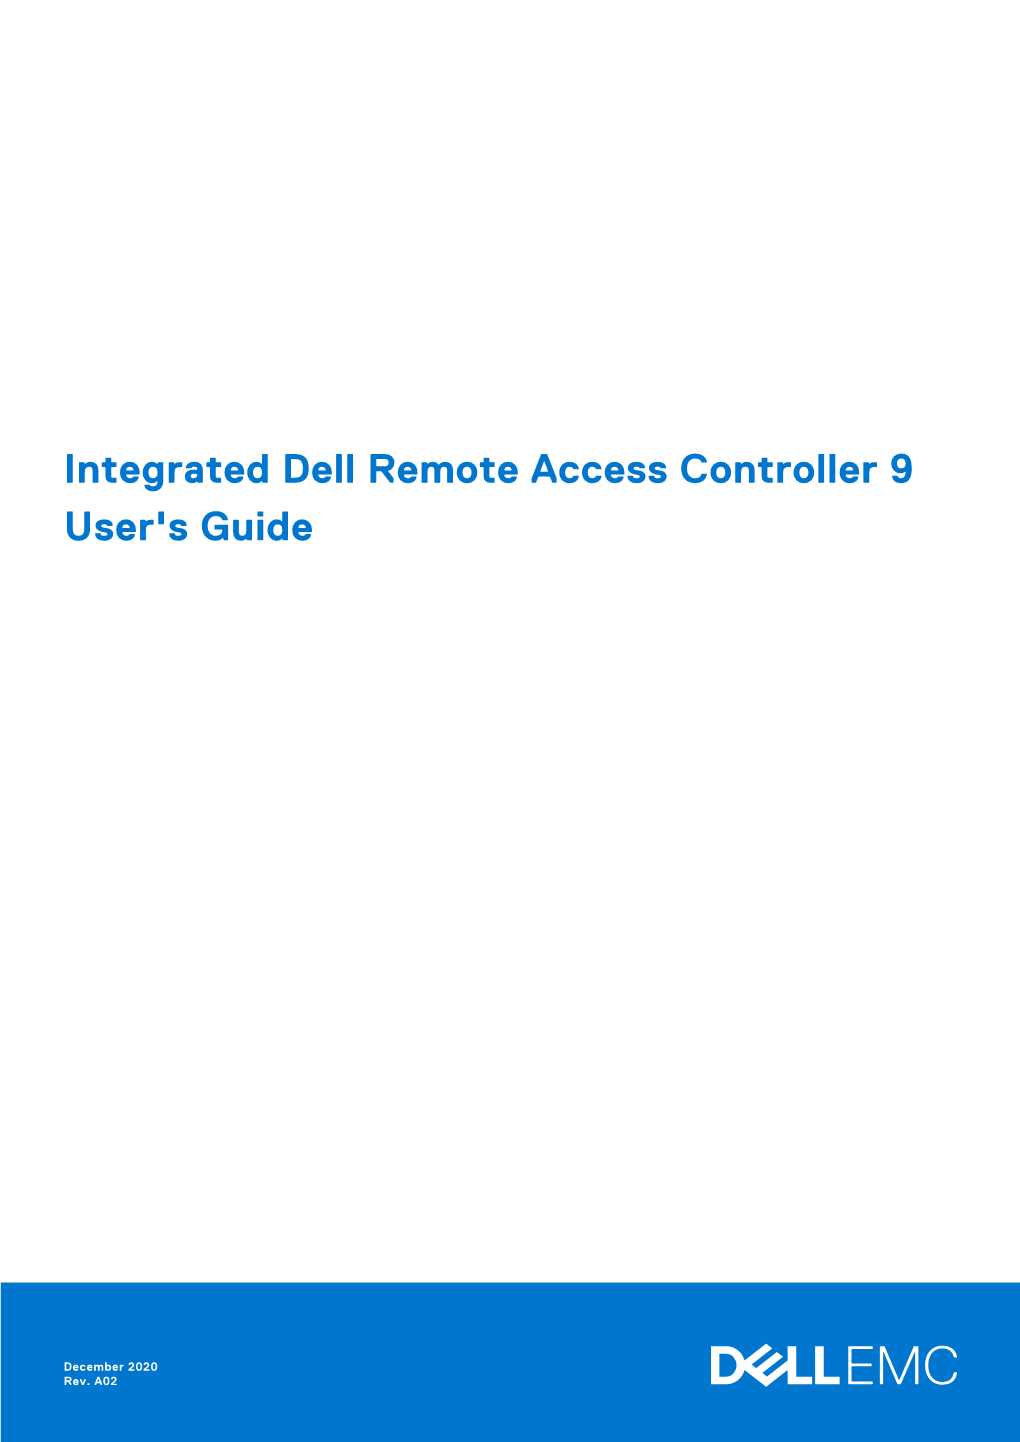 Integrated Dell Remote Access Controller 9 User's Guide